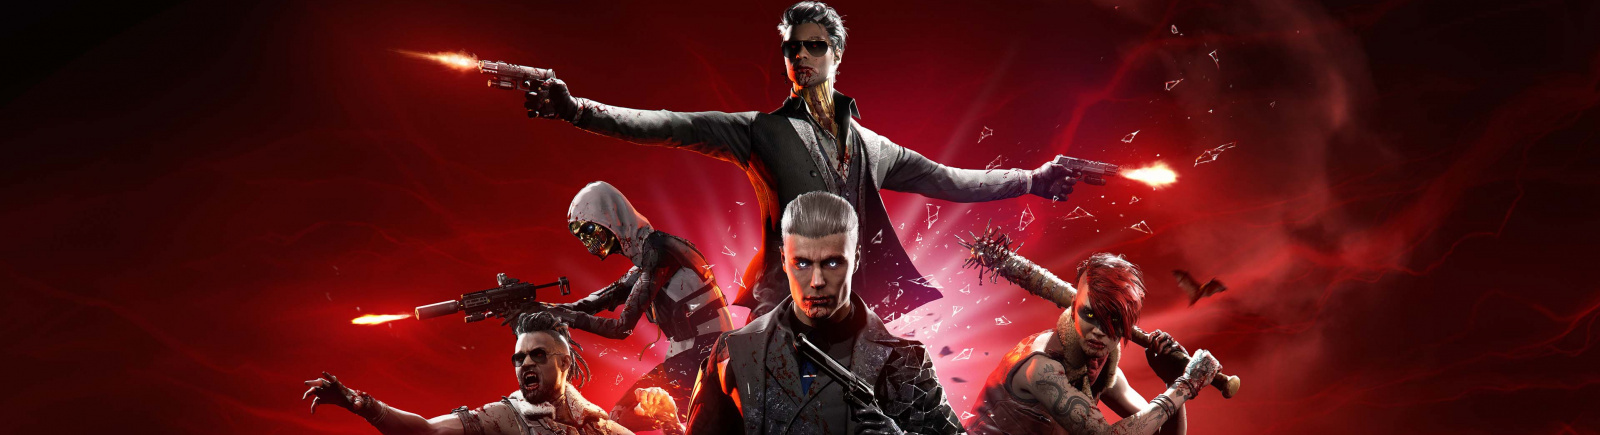 Дата выхода Vampire: The Masquerade - Bloodhunt (Bloodhunt)  на PC и PS5 в России и во всем мире